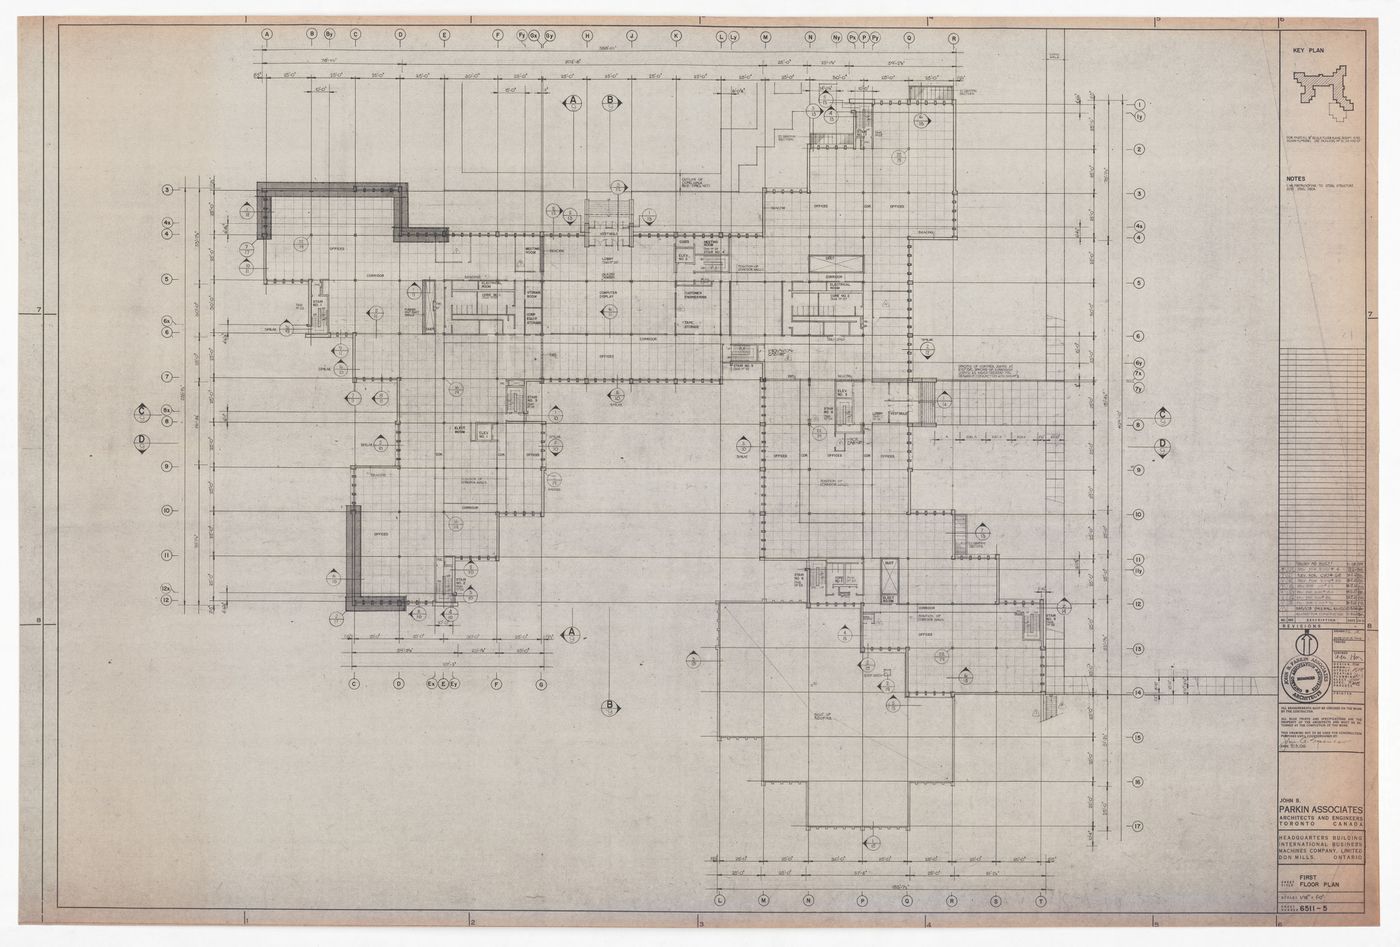 First floor plan for IBM Headquarters Building, North York, Ontario